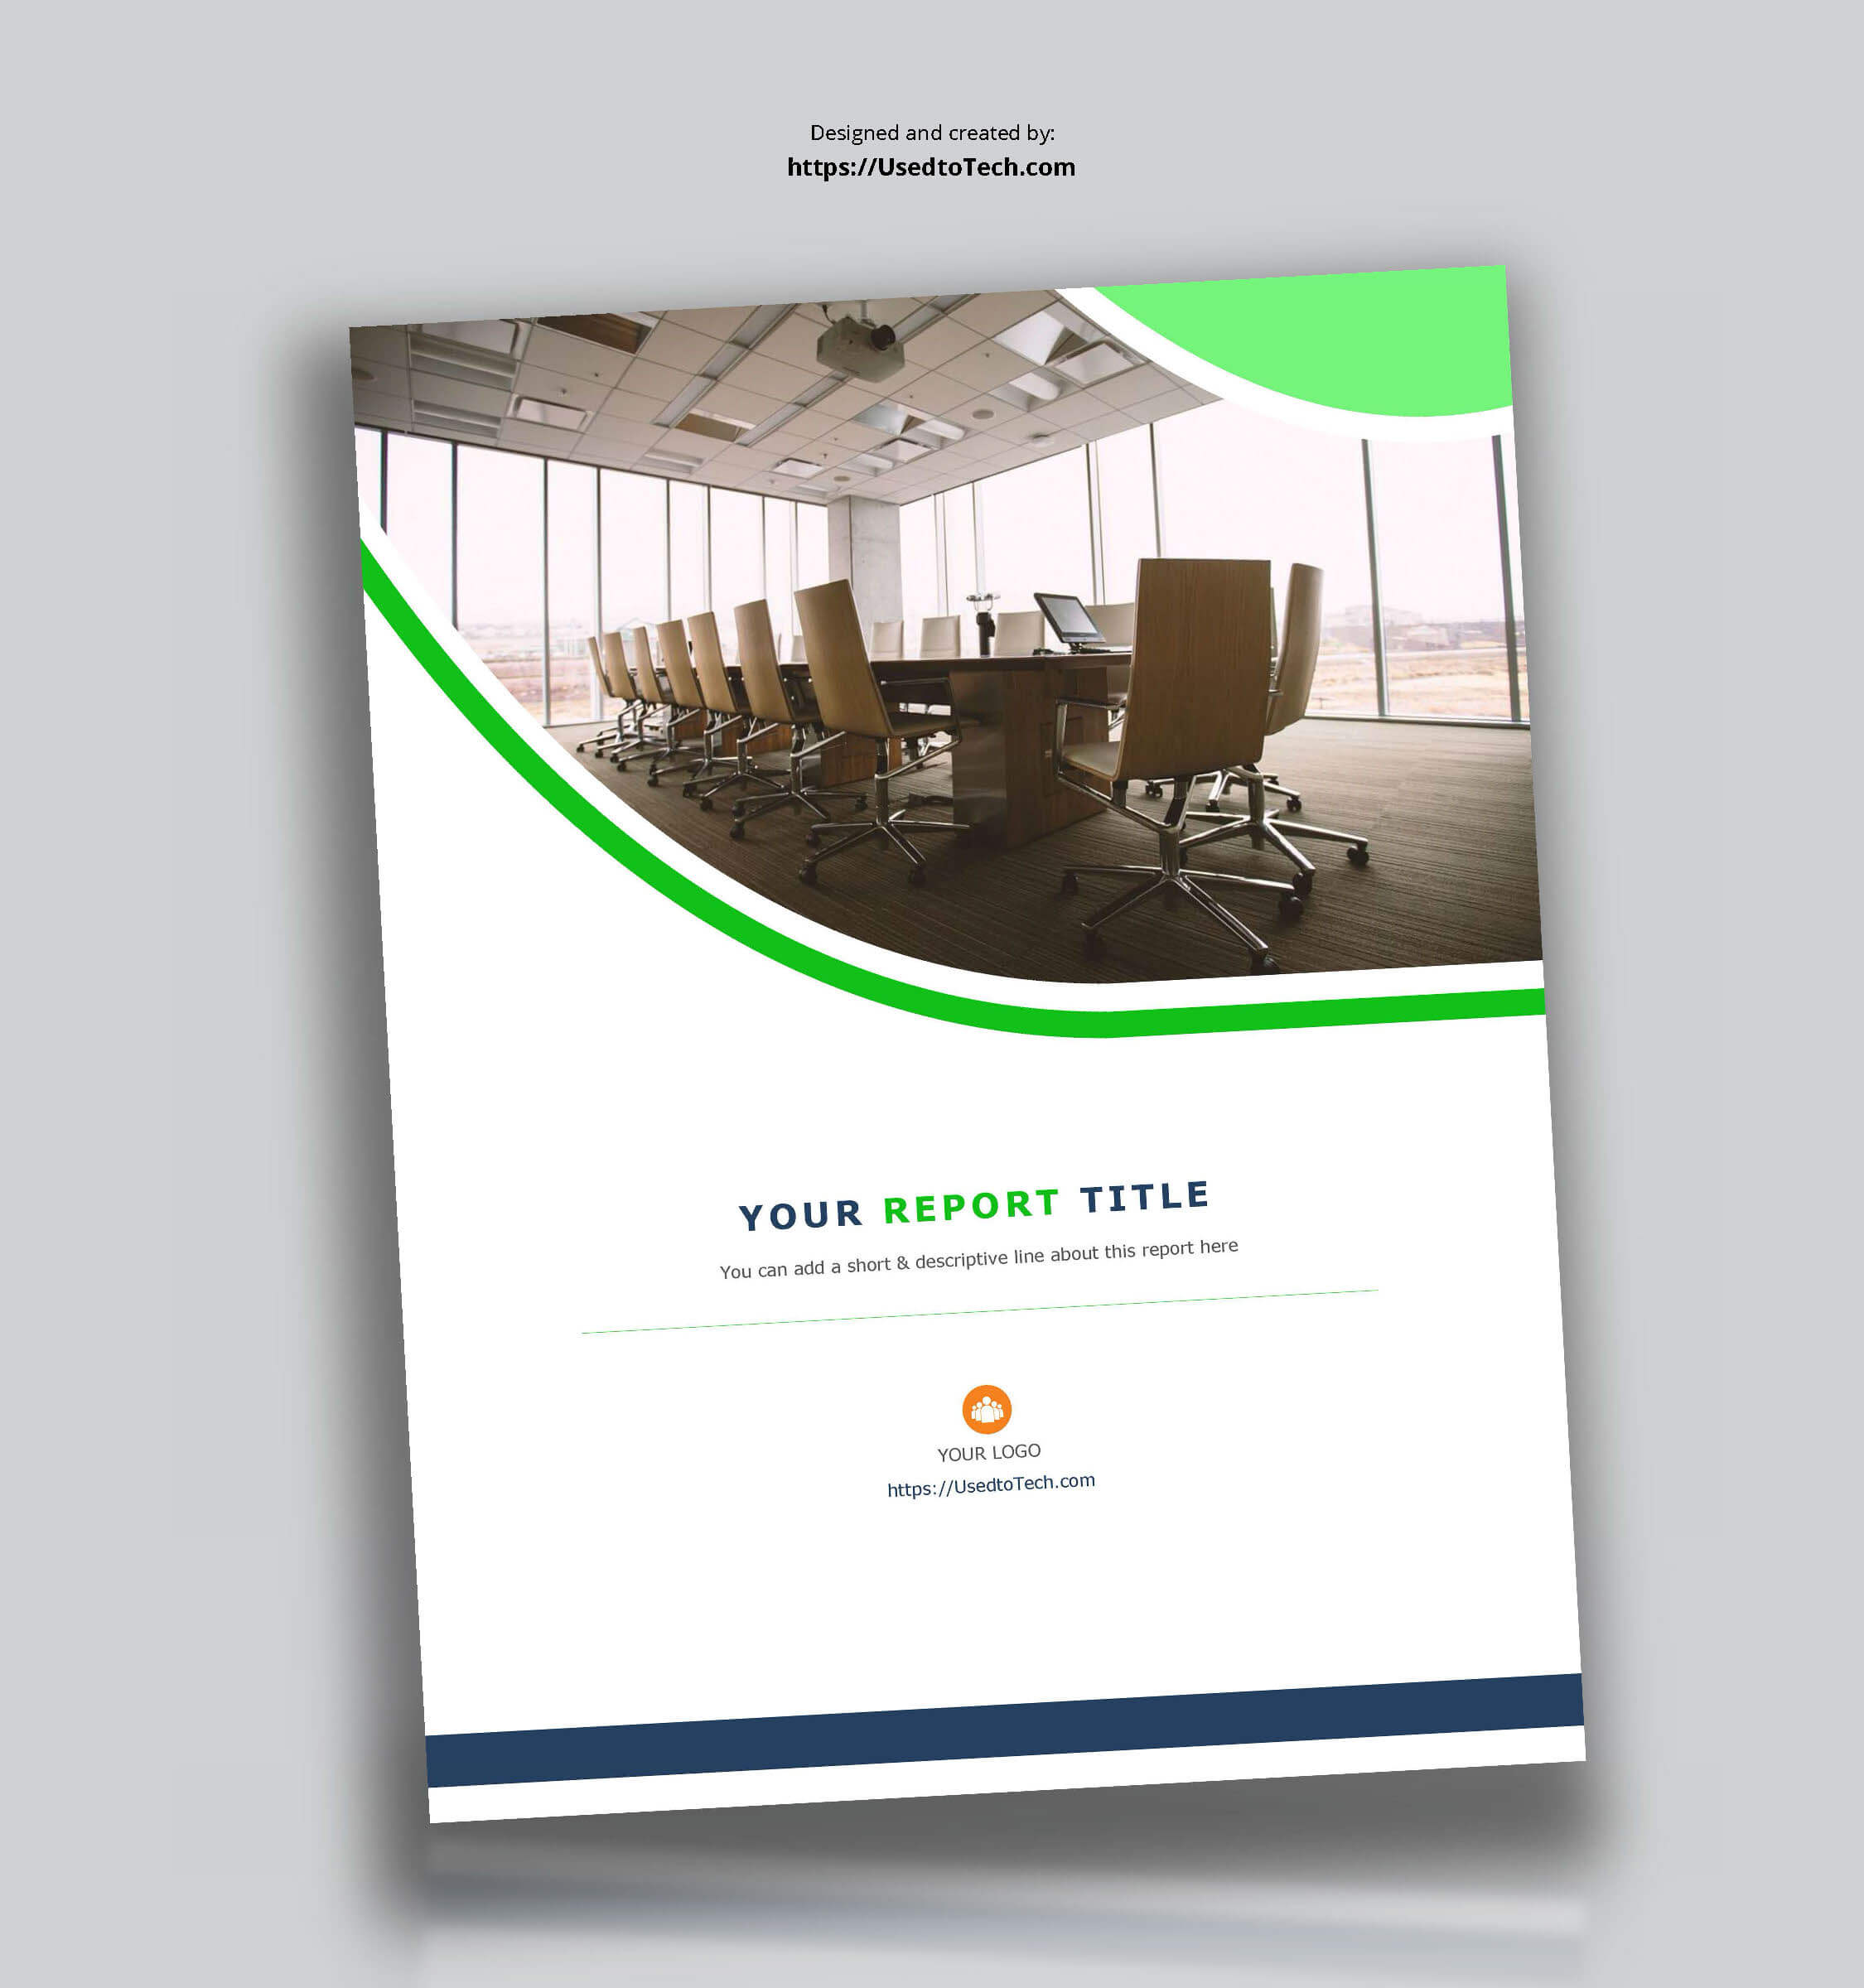 Corporate Report Design Template In Microsoft Word – Used To With Regard To Microsoft Word Templates Reports